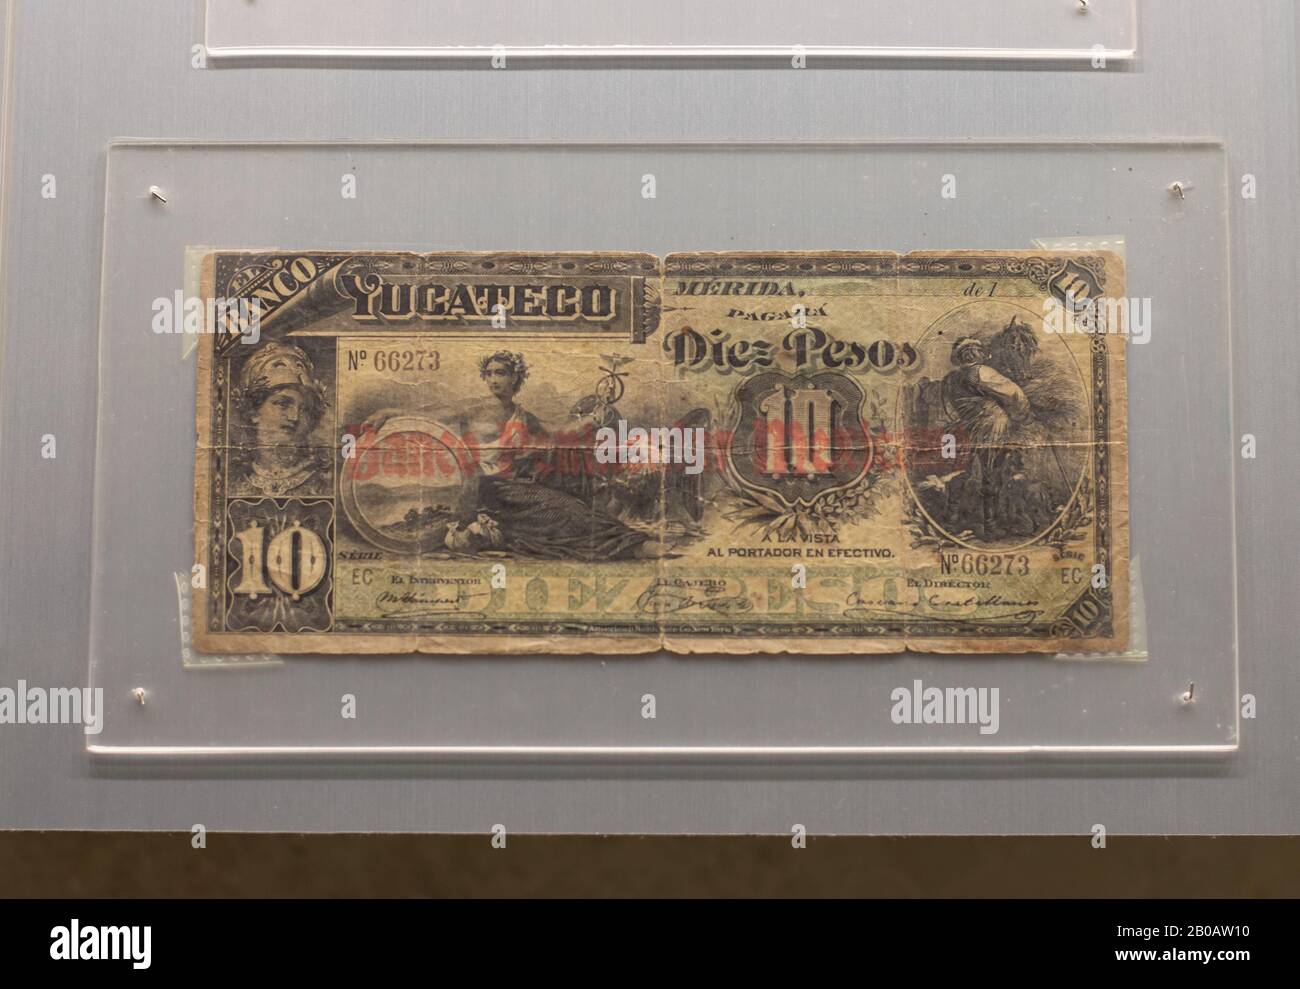 Vieux billets de banque mexicains, monnaie, argent, de la Banco Peninsular Mexicano. Merida, Yucatan, Mexique. Banque D'Images